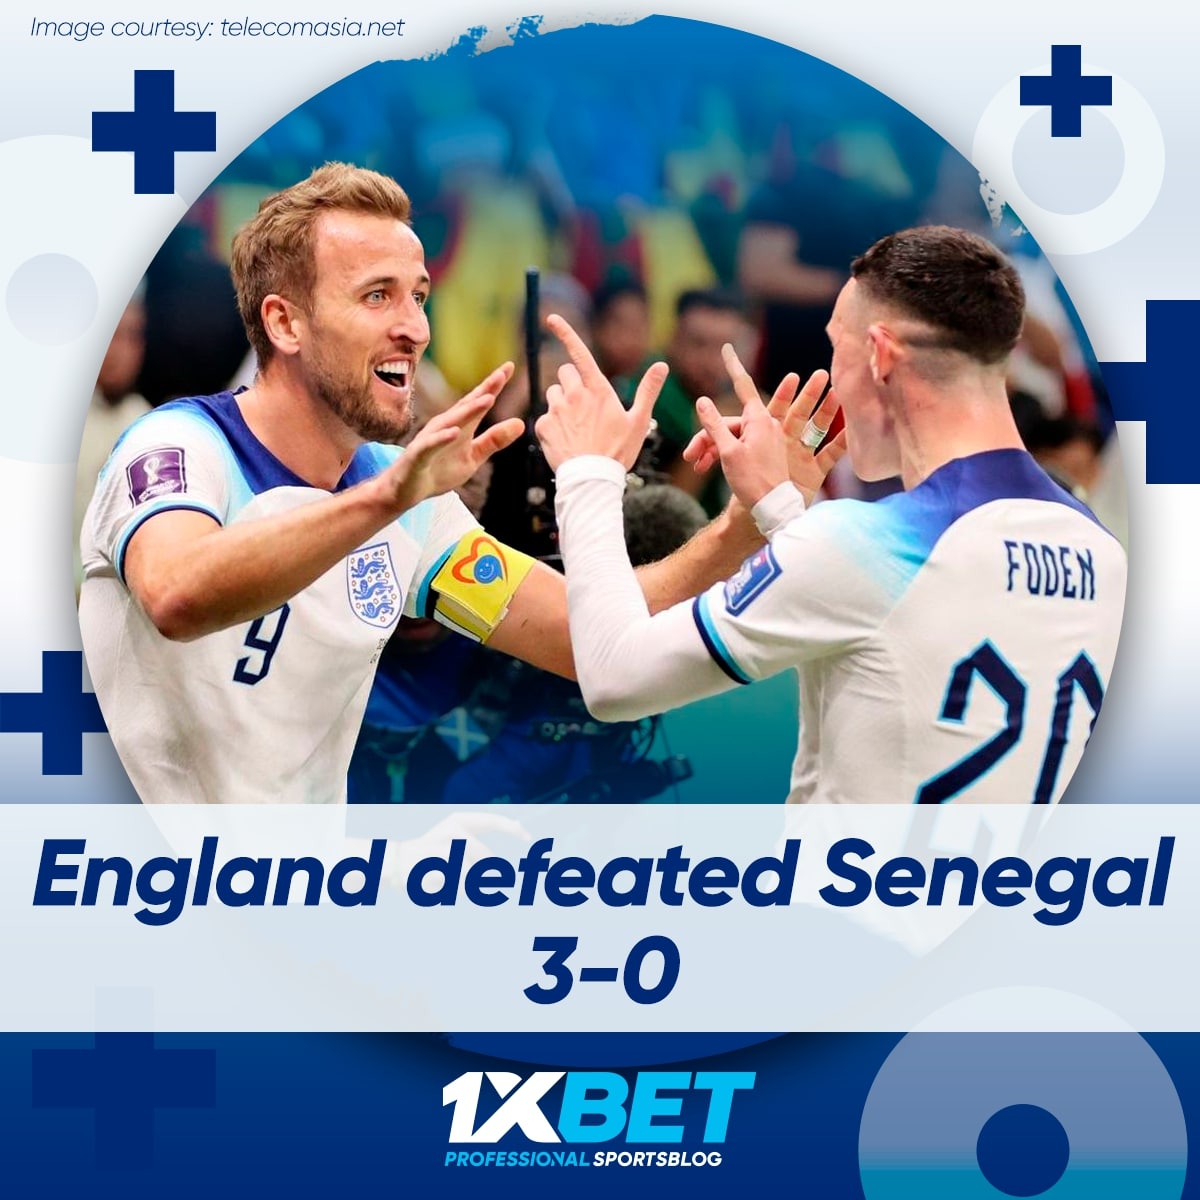 England defeated Senegal 3-0